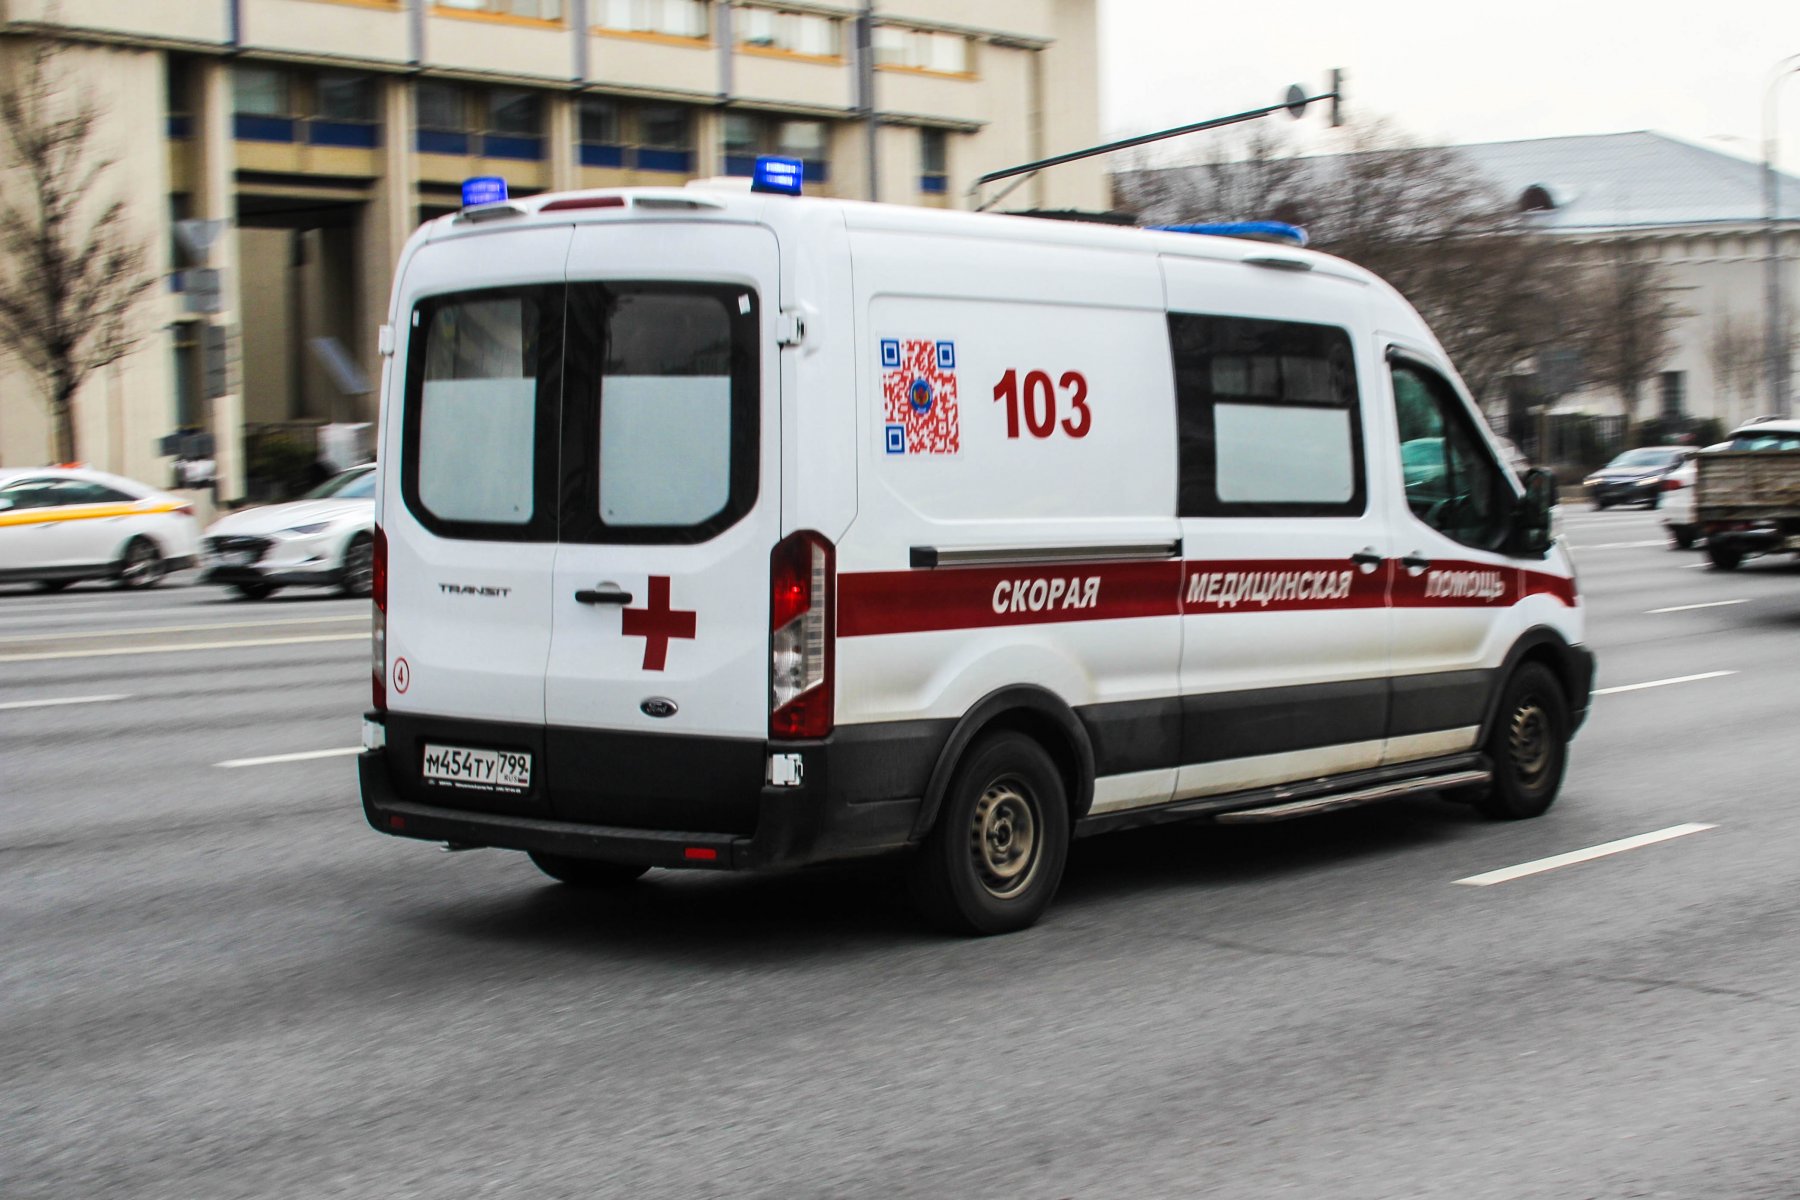 Два человека пострадали при столкновении автобуса и легковушки в Москве